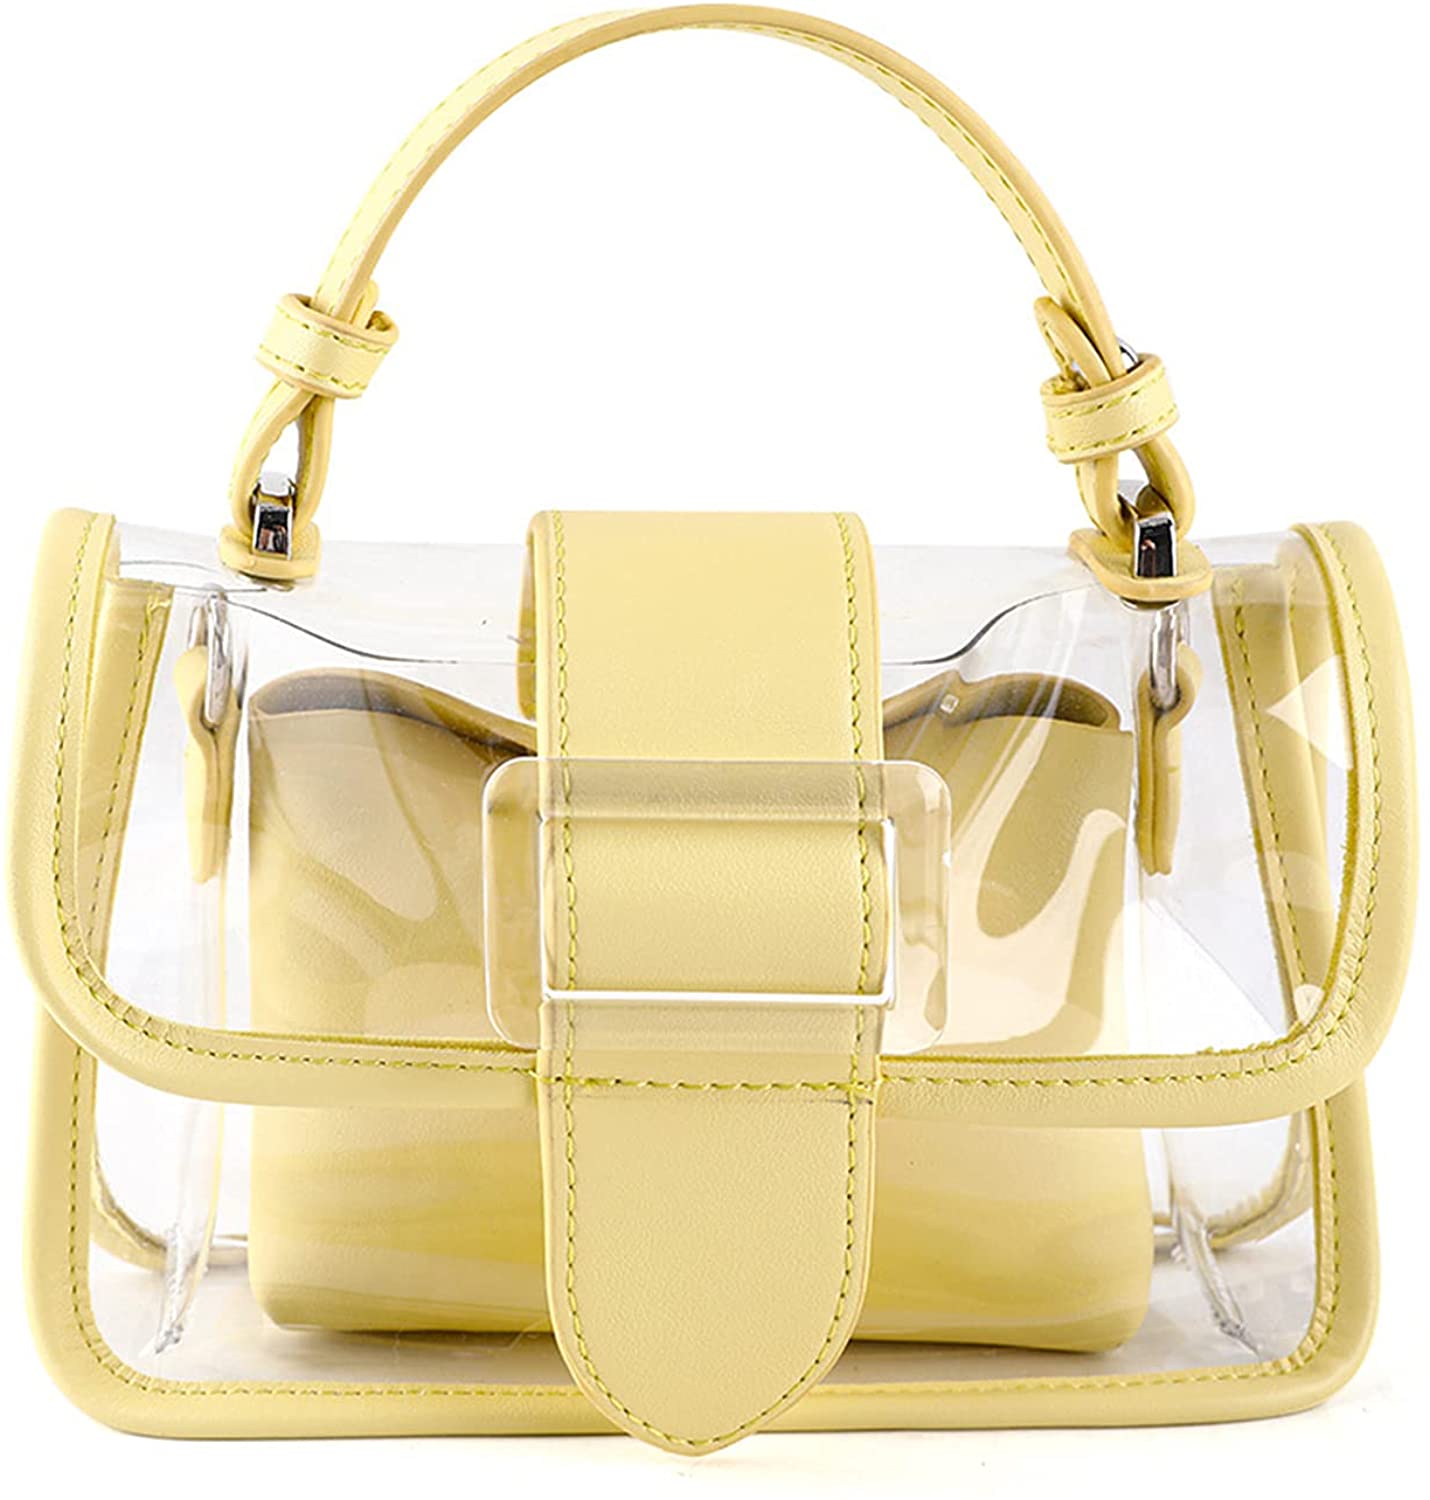 Small Light Yellow Buckled Talbots Ladies Leather Purse | eBay